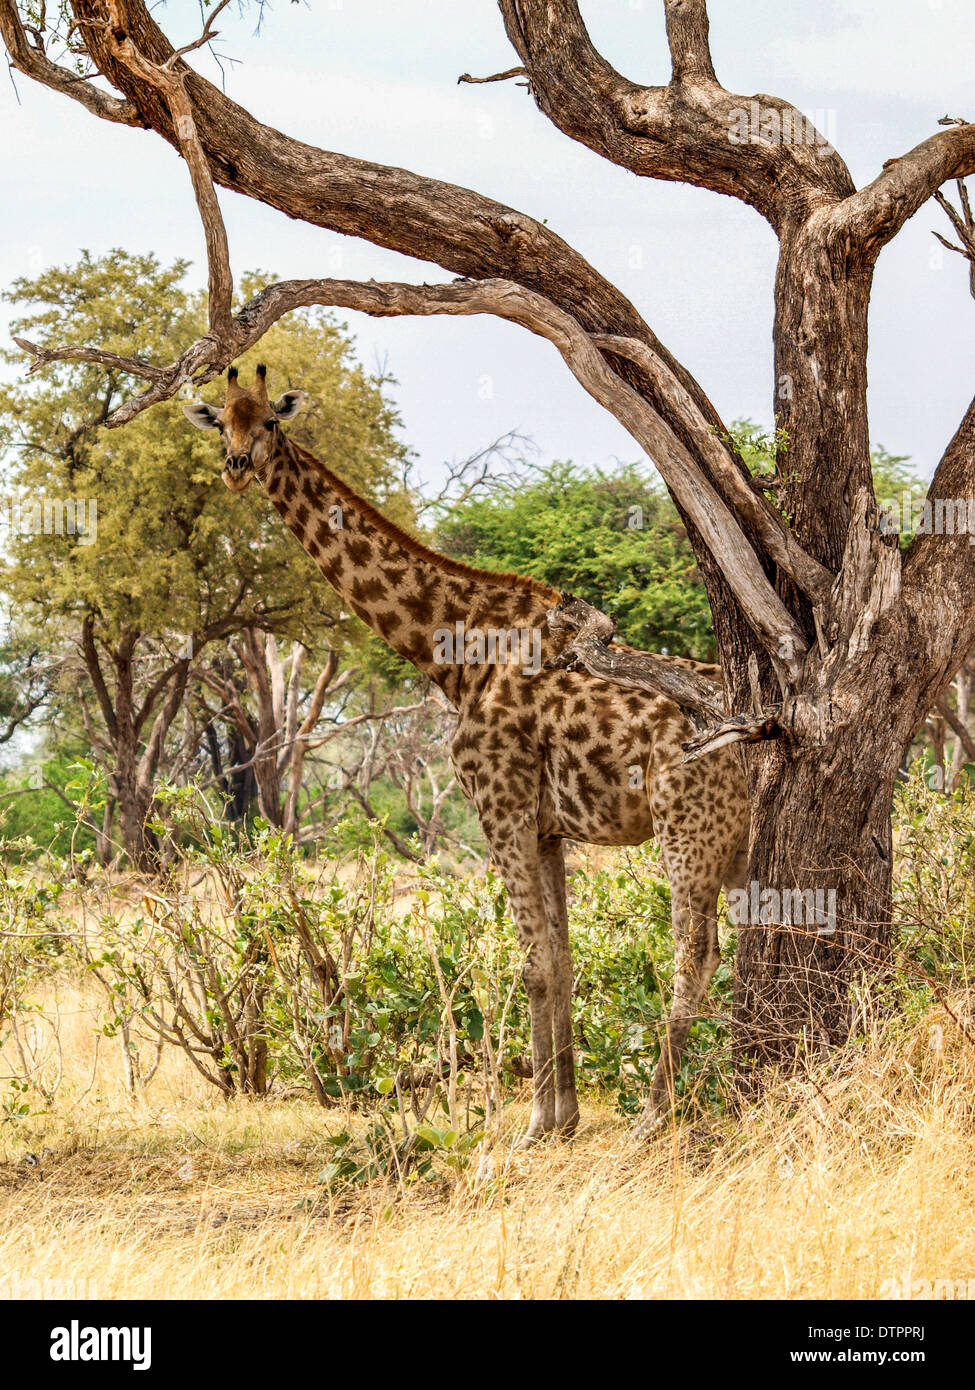 Giraffe under a tree looking at camera Stock Photo